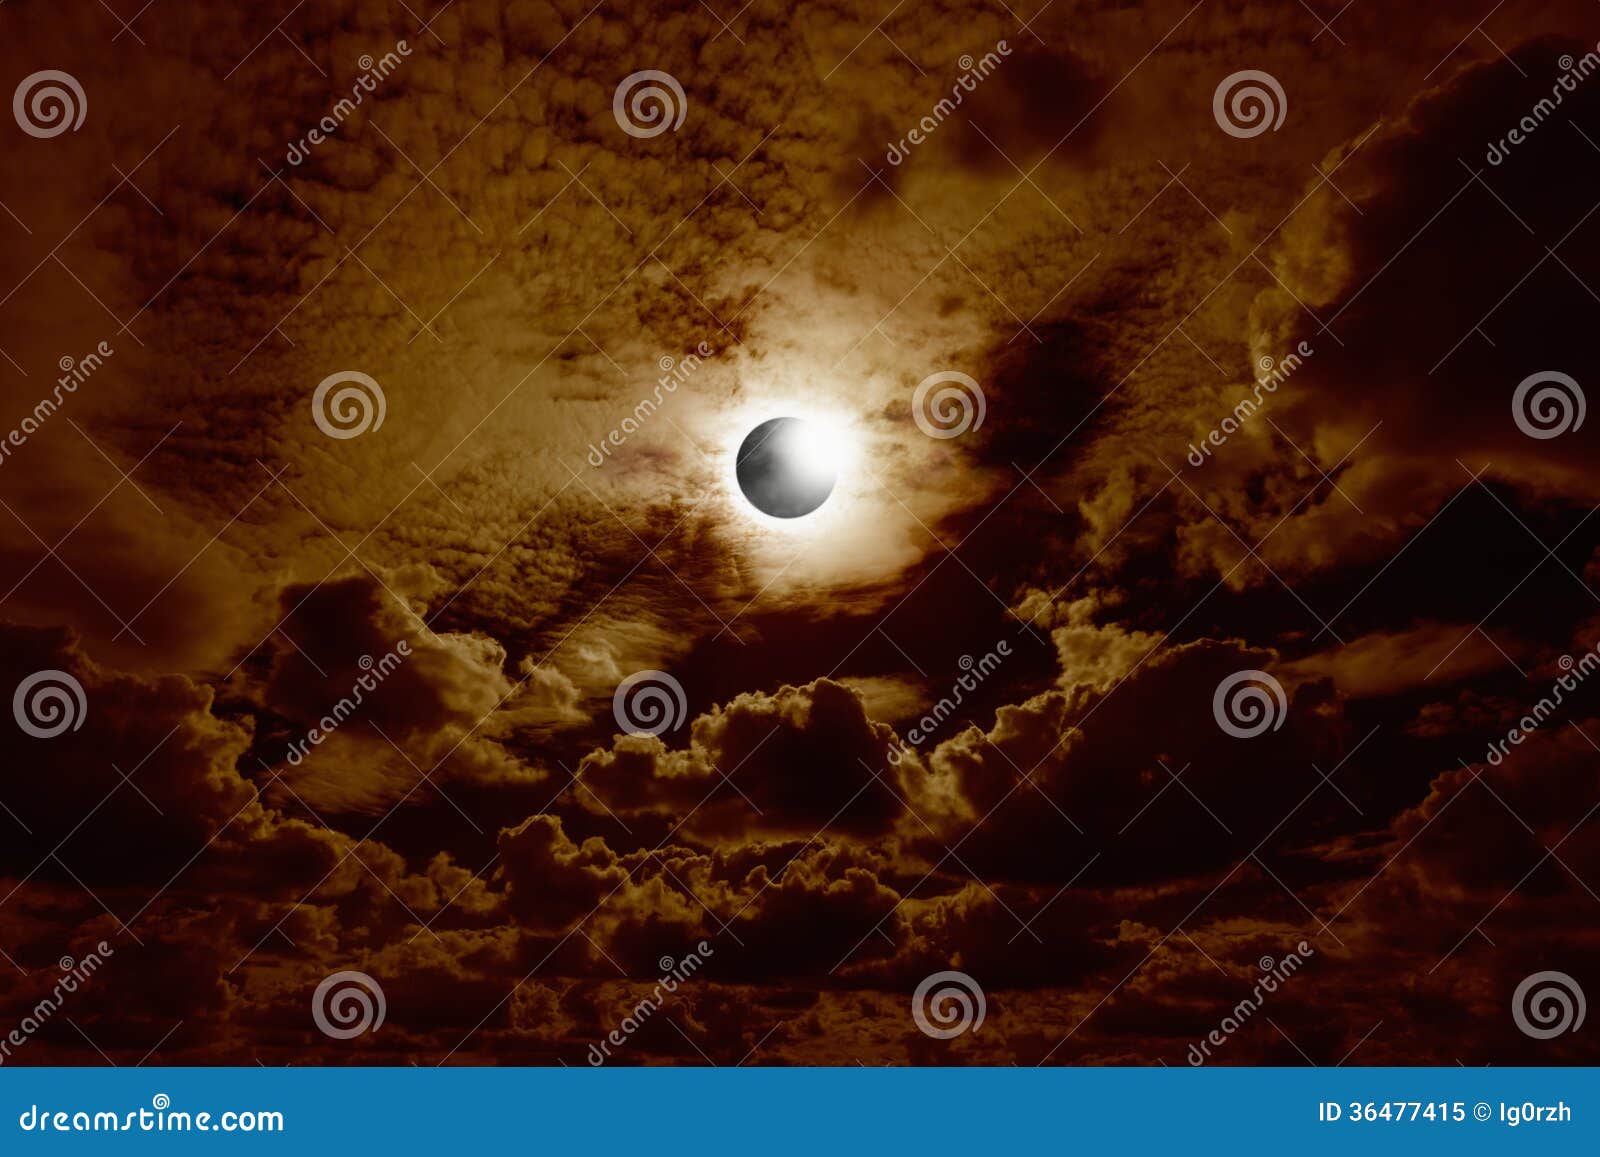 full solar eclipse